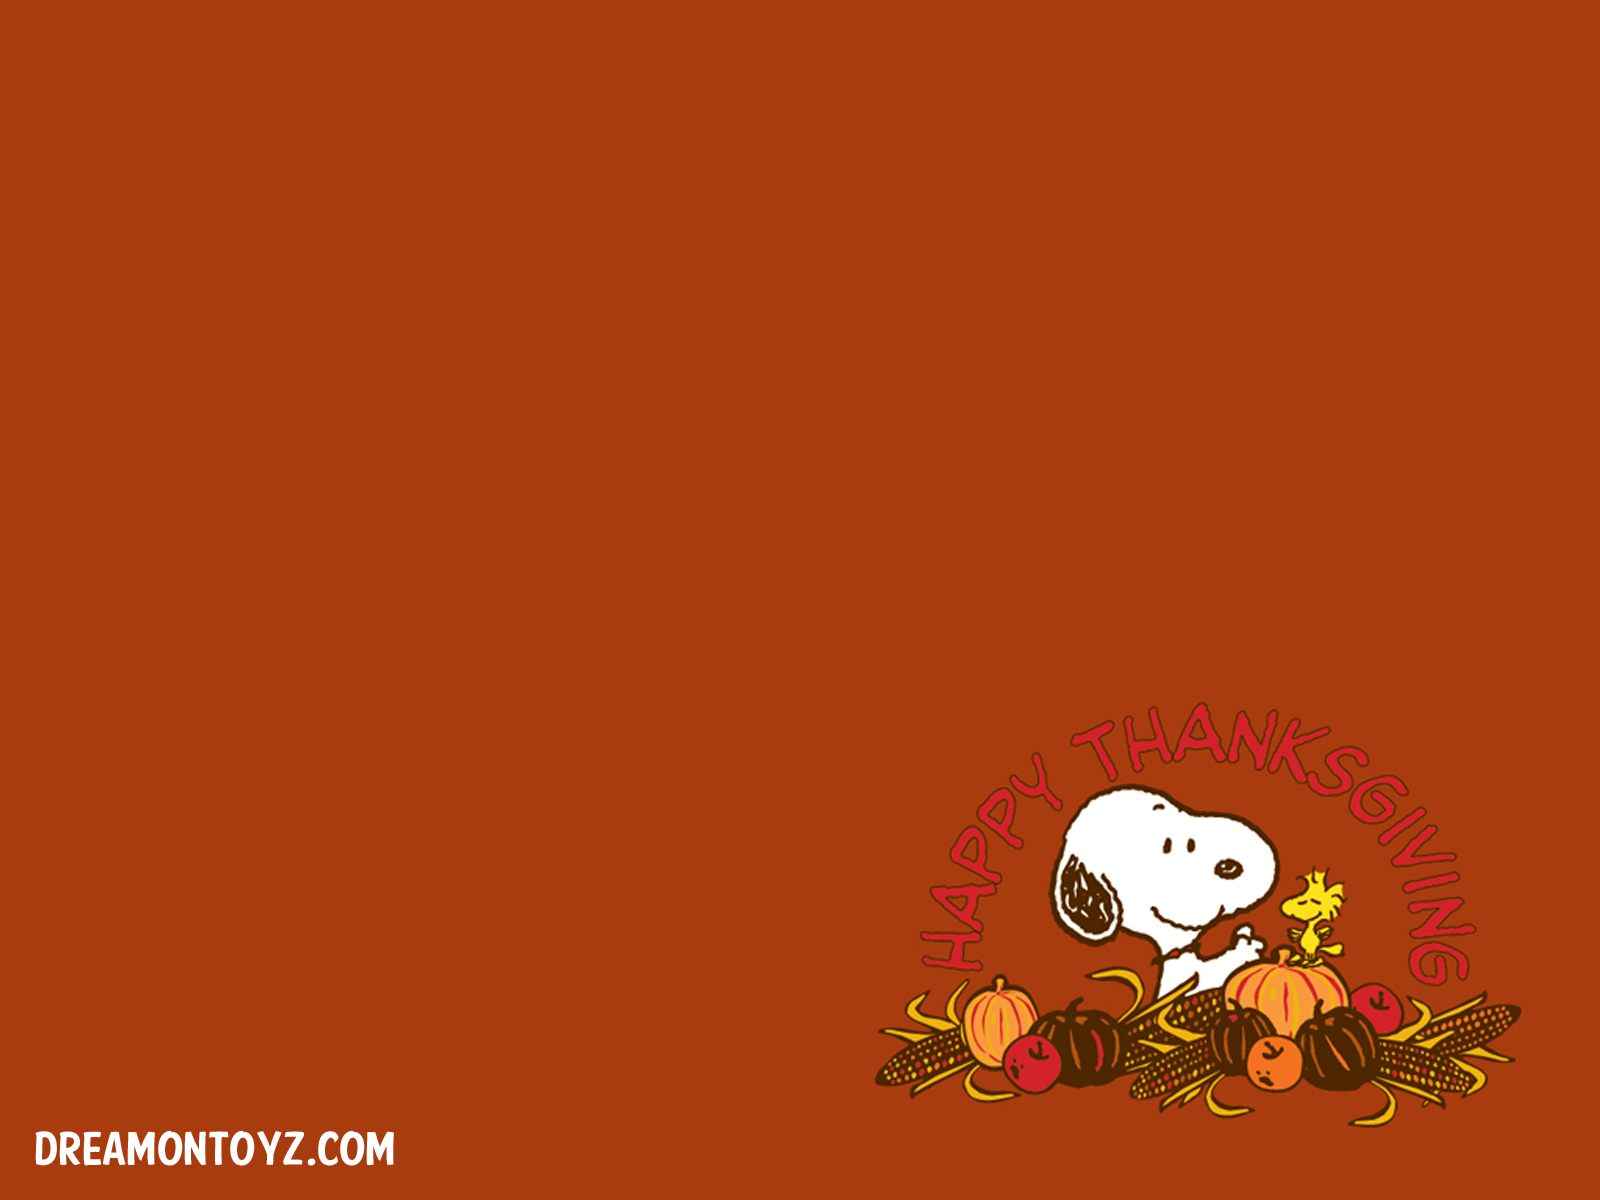 FREE Cartoon Graphics / Pics / Gifs / Photographs: Peanuts Snoopy